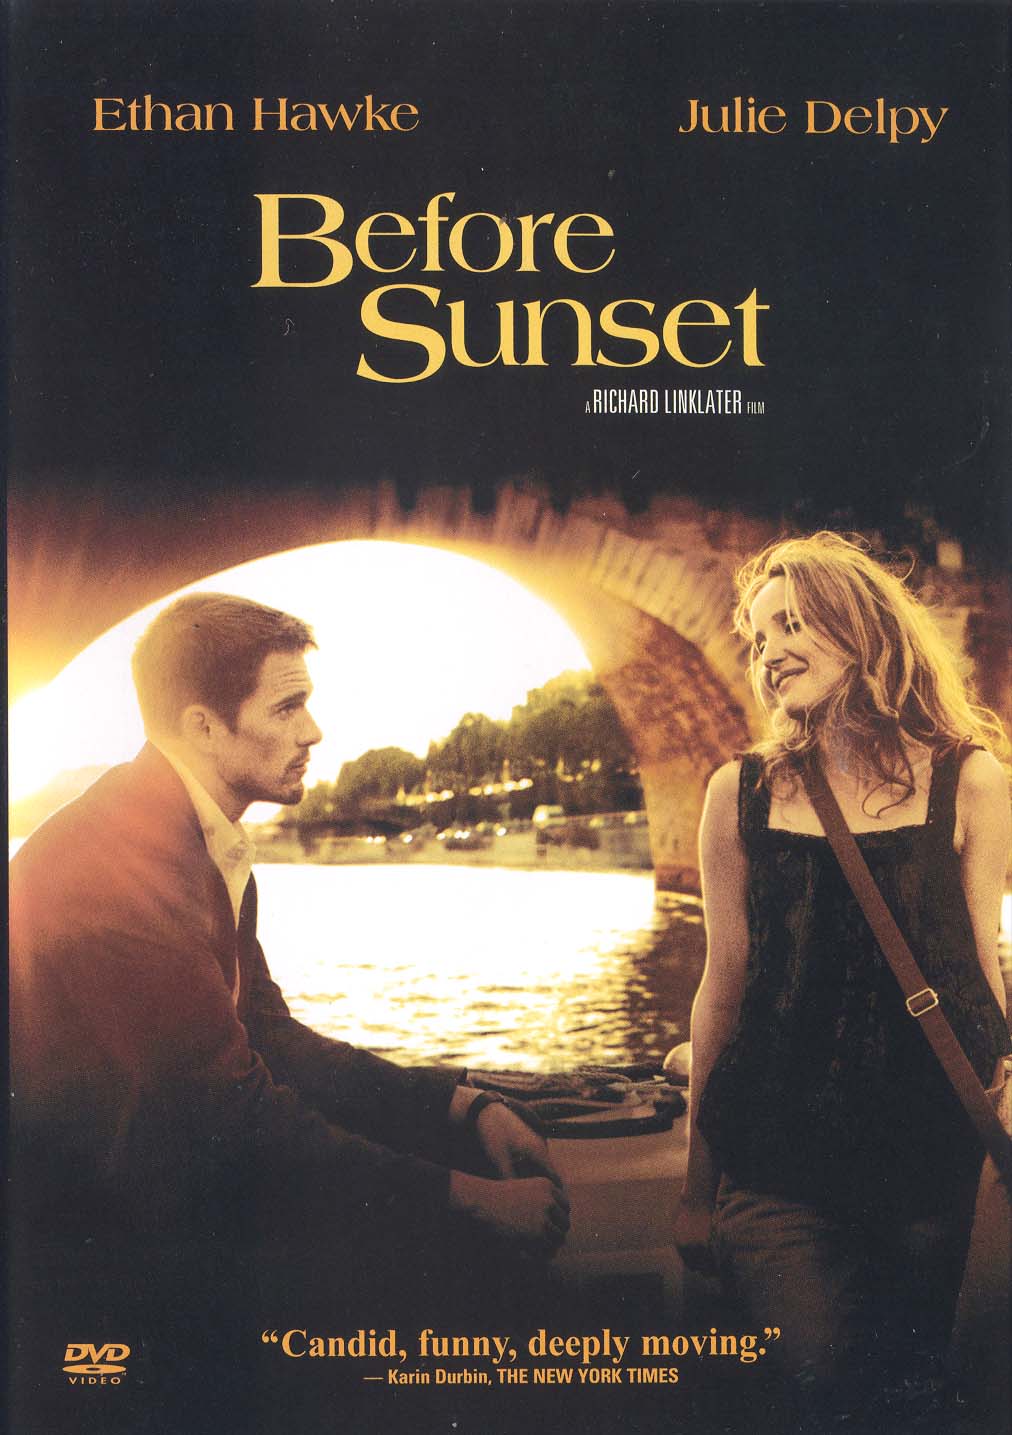 Stiahni si Filmy s titulkama Pred soumrakem / Before Sunset (2004) = CSFD 82%